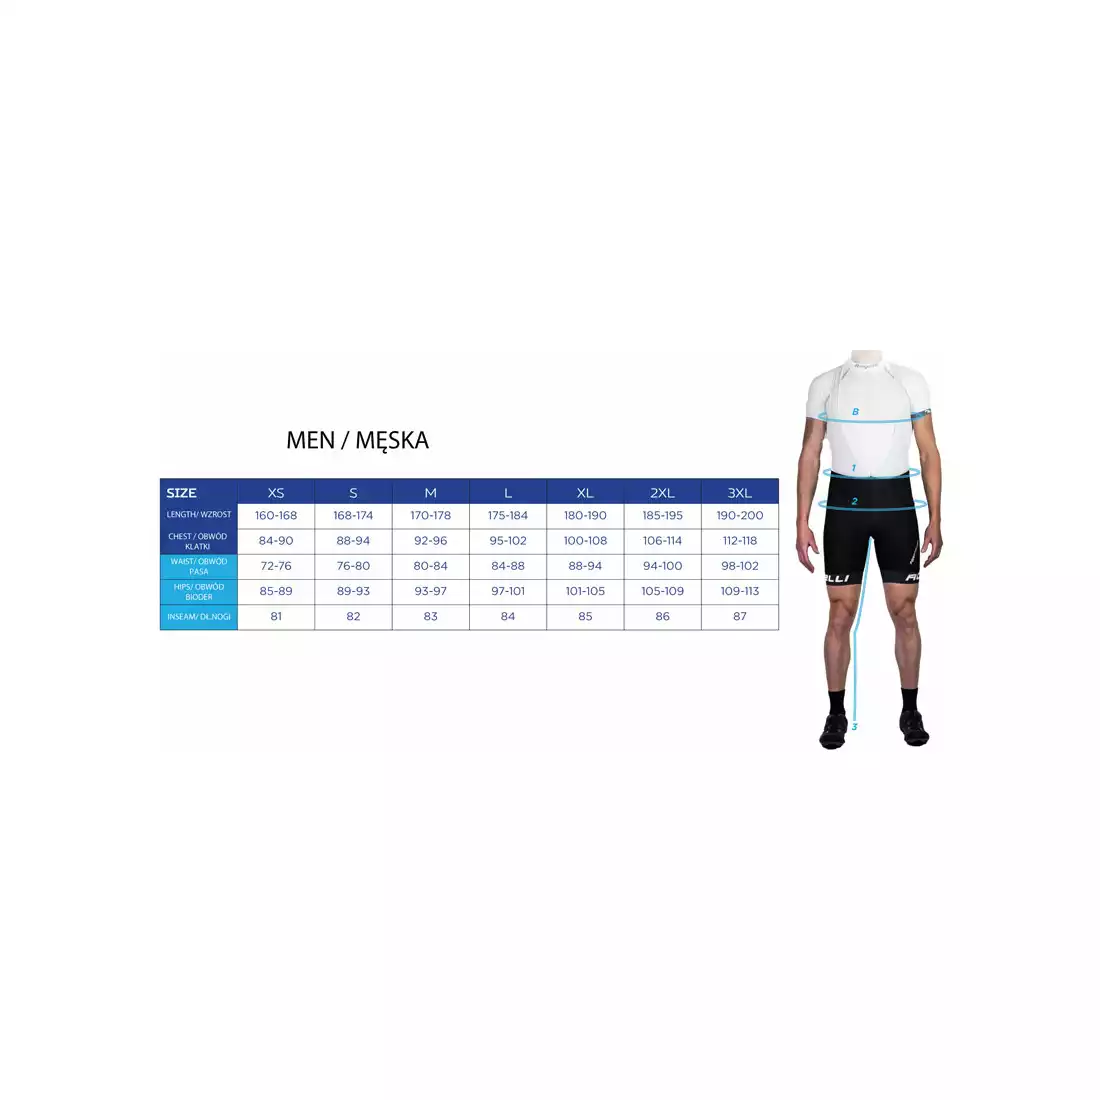 ROGELLI TRI FLORIDA 030.003  męski strój triathlonowy, czarny